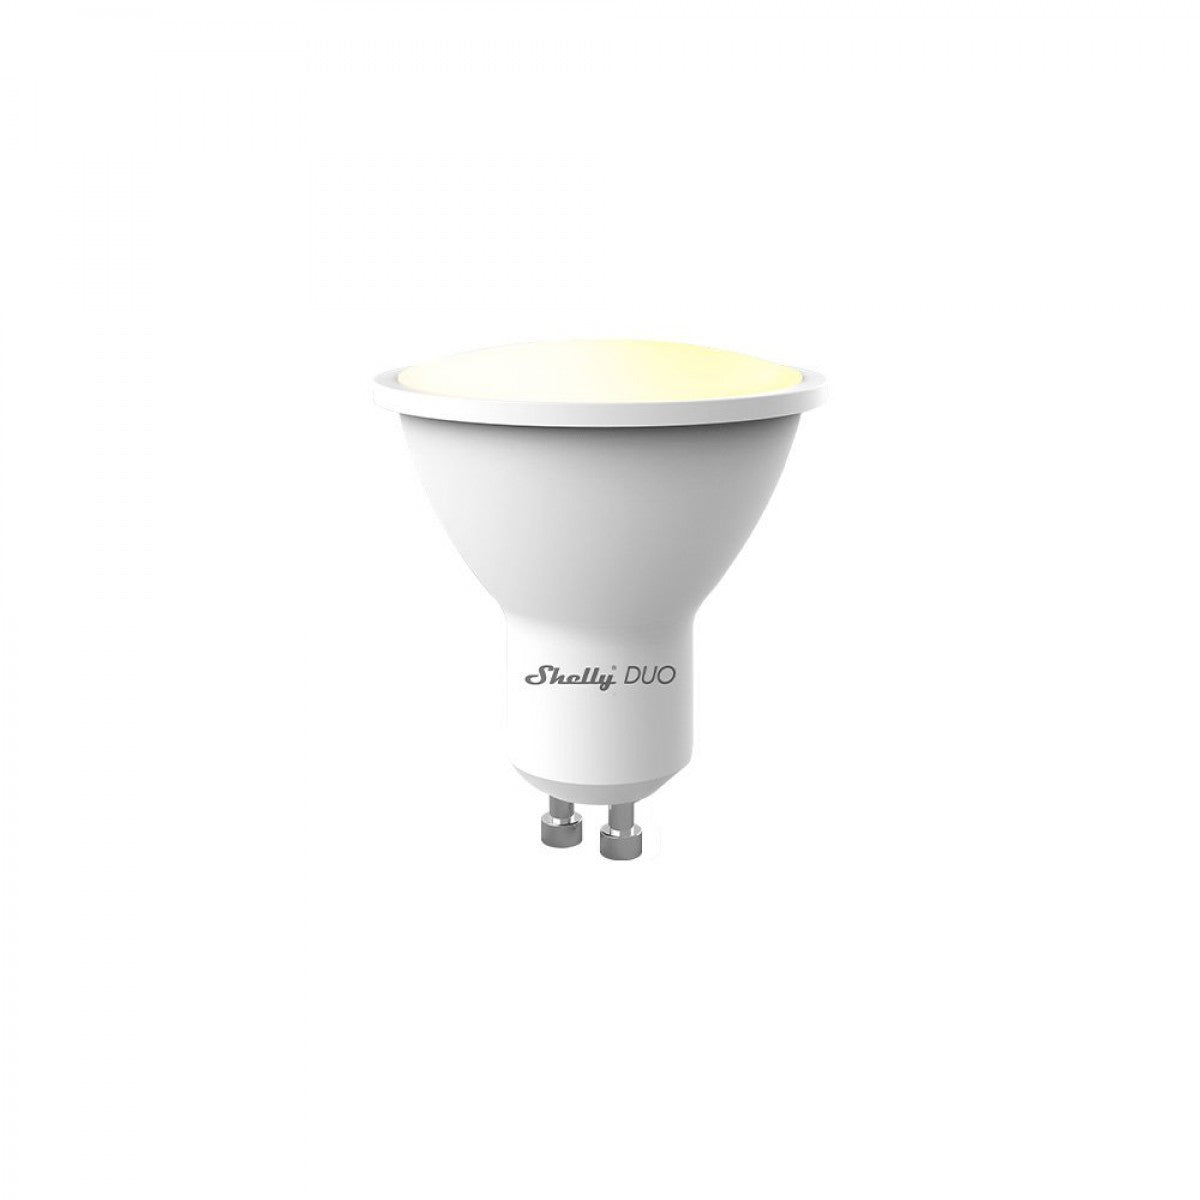 4x Shelly DUO RGBW LED WiFi Lamp 5 Watt GU10 Socket Color + White Tasmota